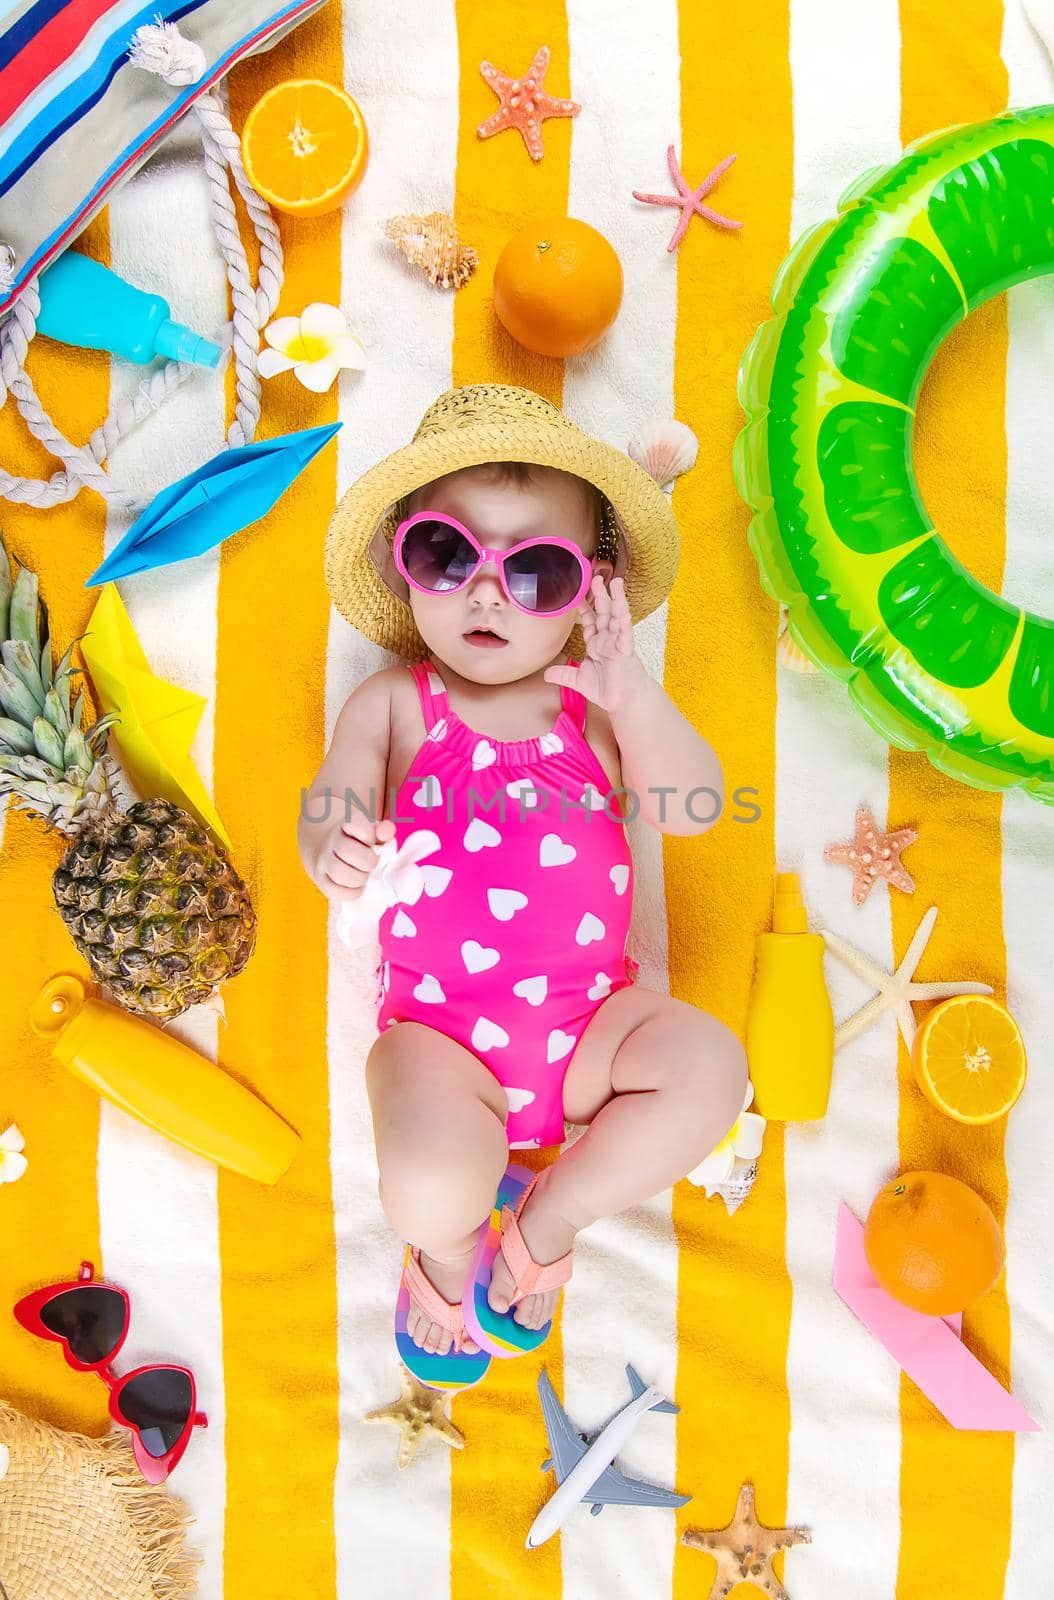 Baby on a beach towel at the sea. Selective focus. by yanadjana